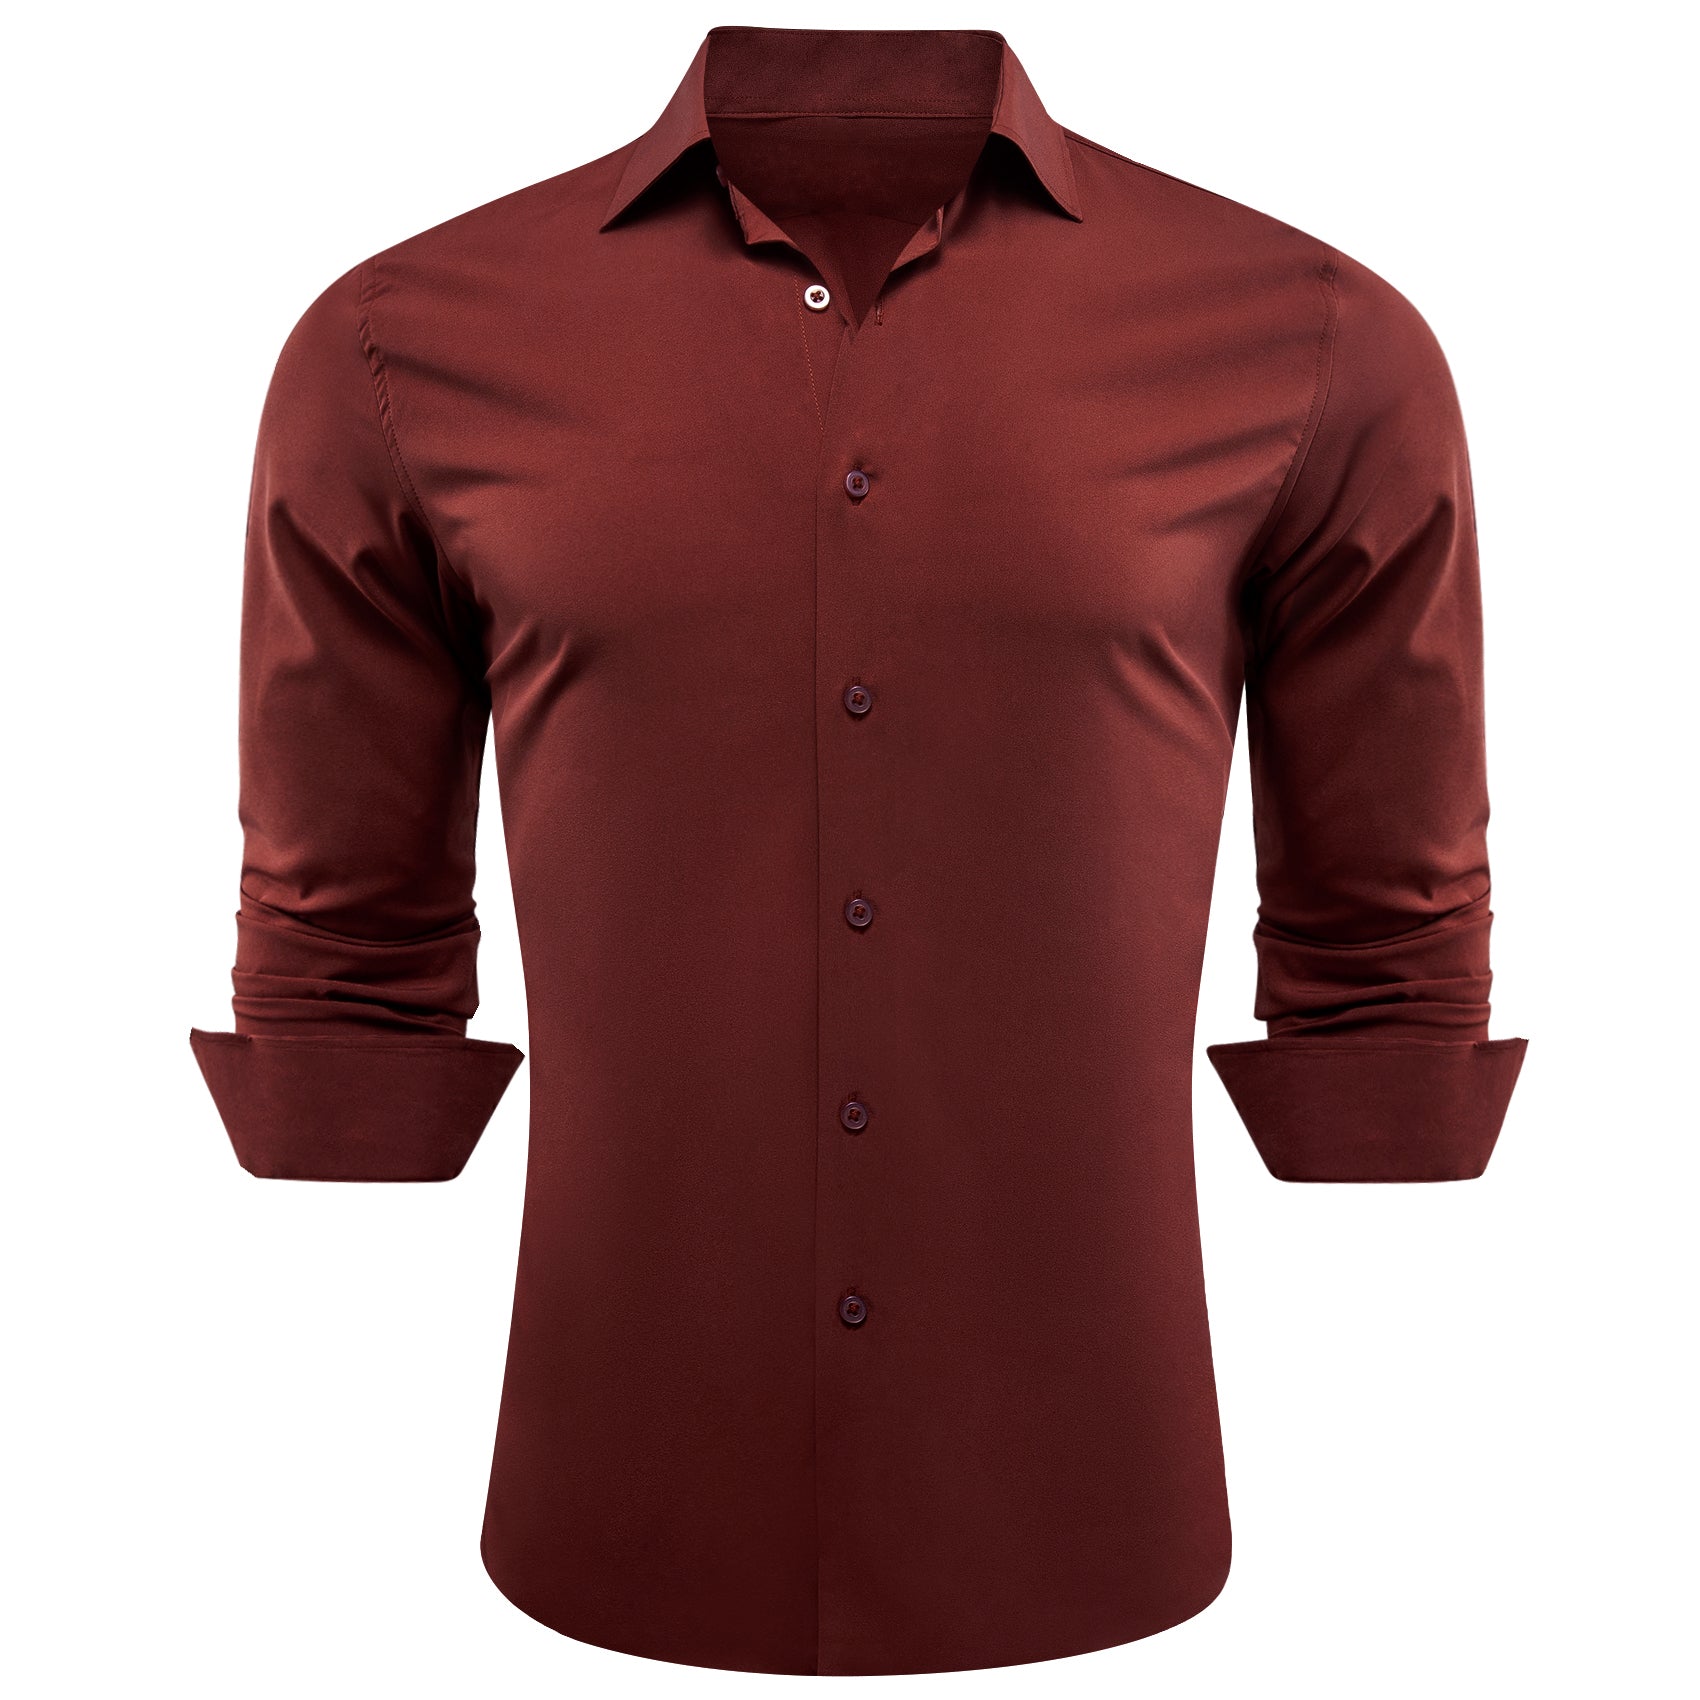 Barry.wang Maroon Solid Silk Shirt